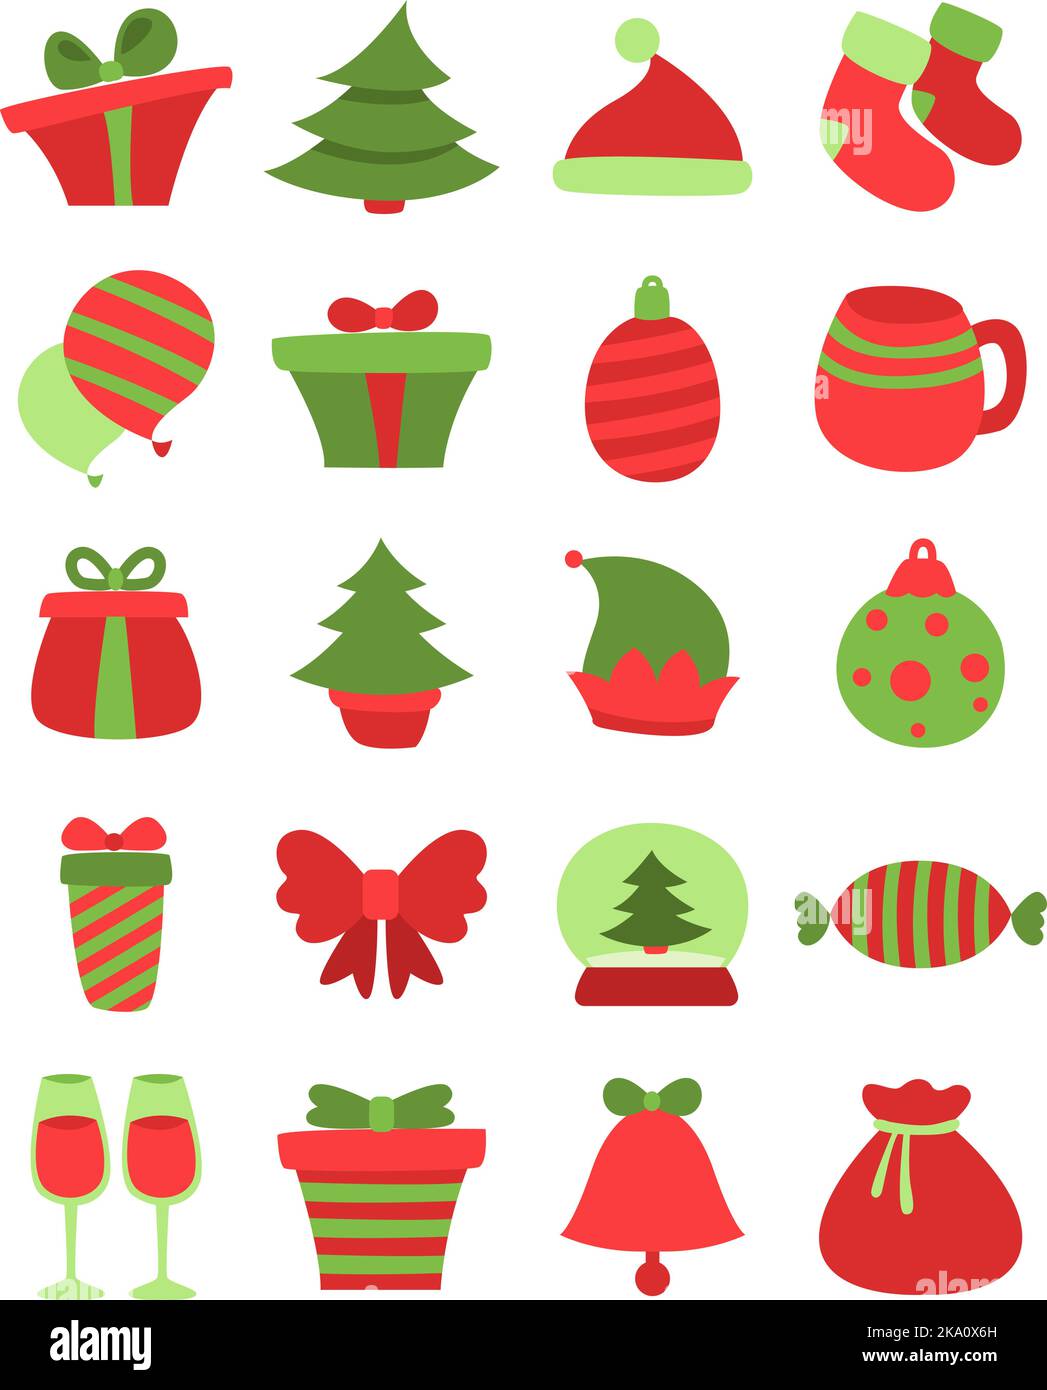 Christmas celebration, illustration or icon, vector on white background. Stock Vector